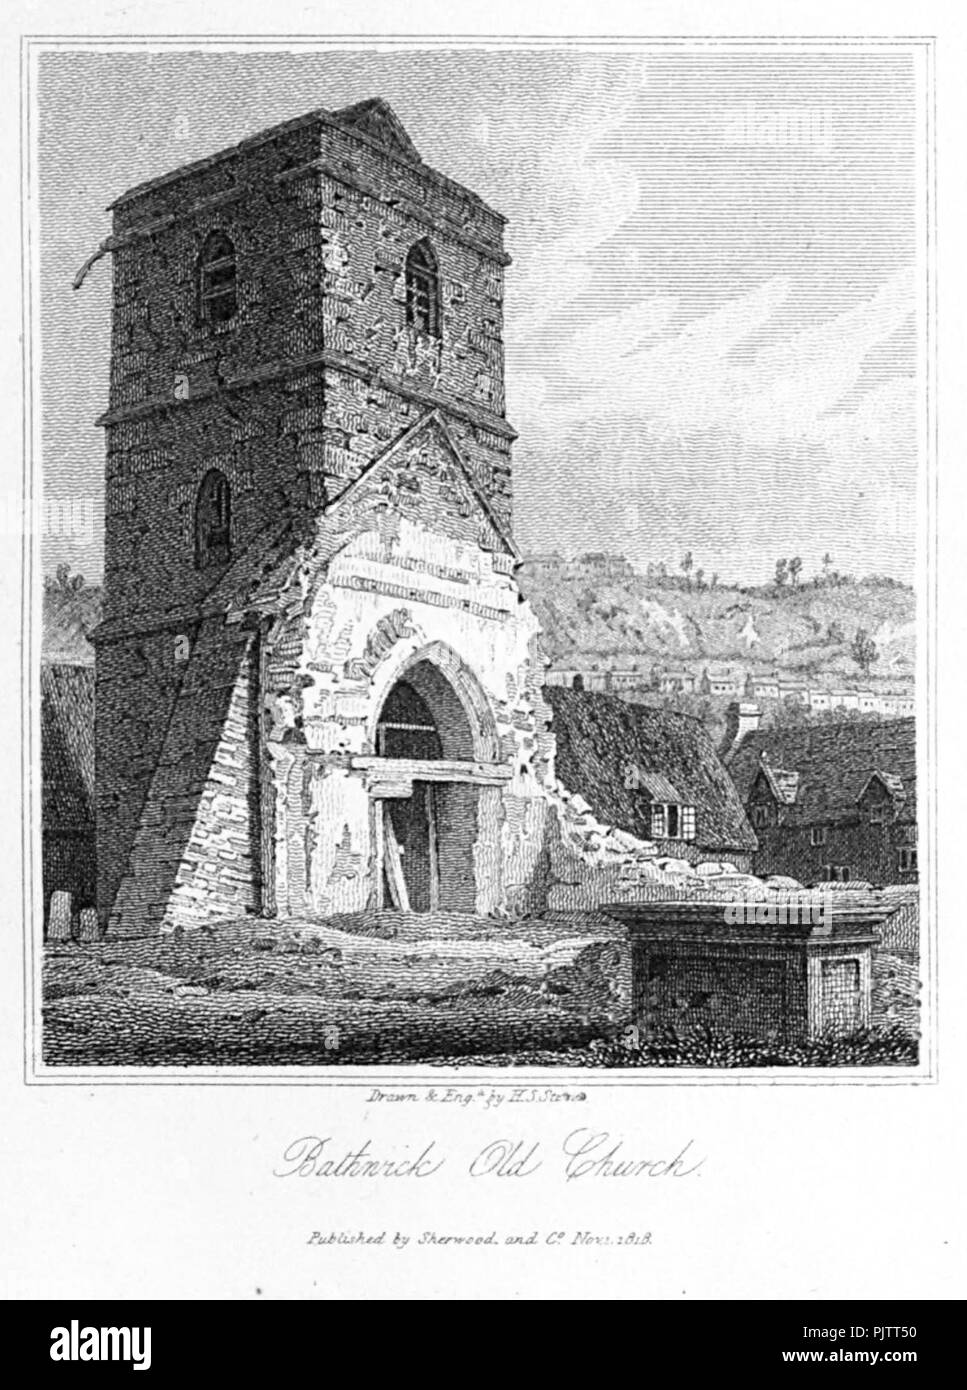 Bathwick Old Church (1818). Stock Photo